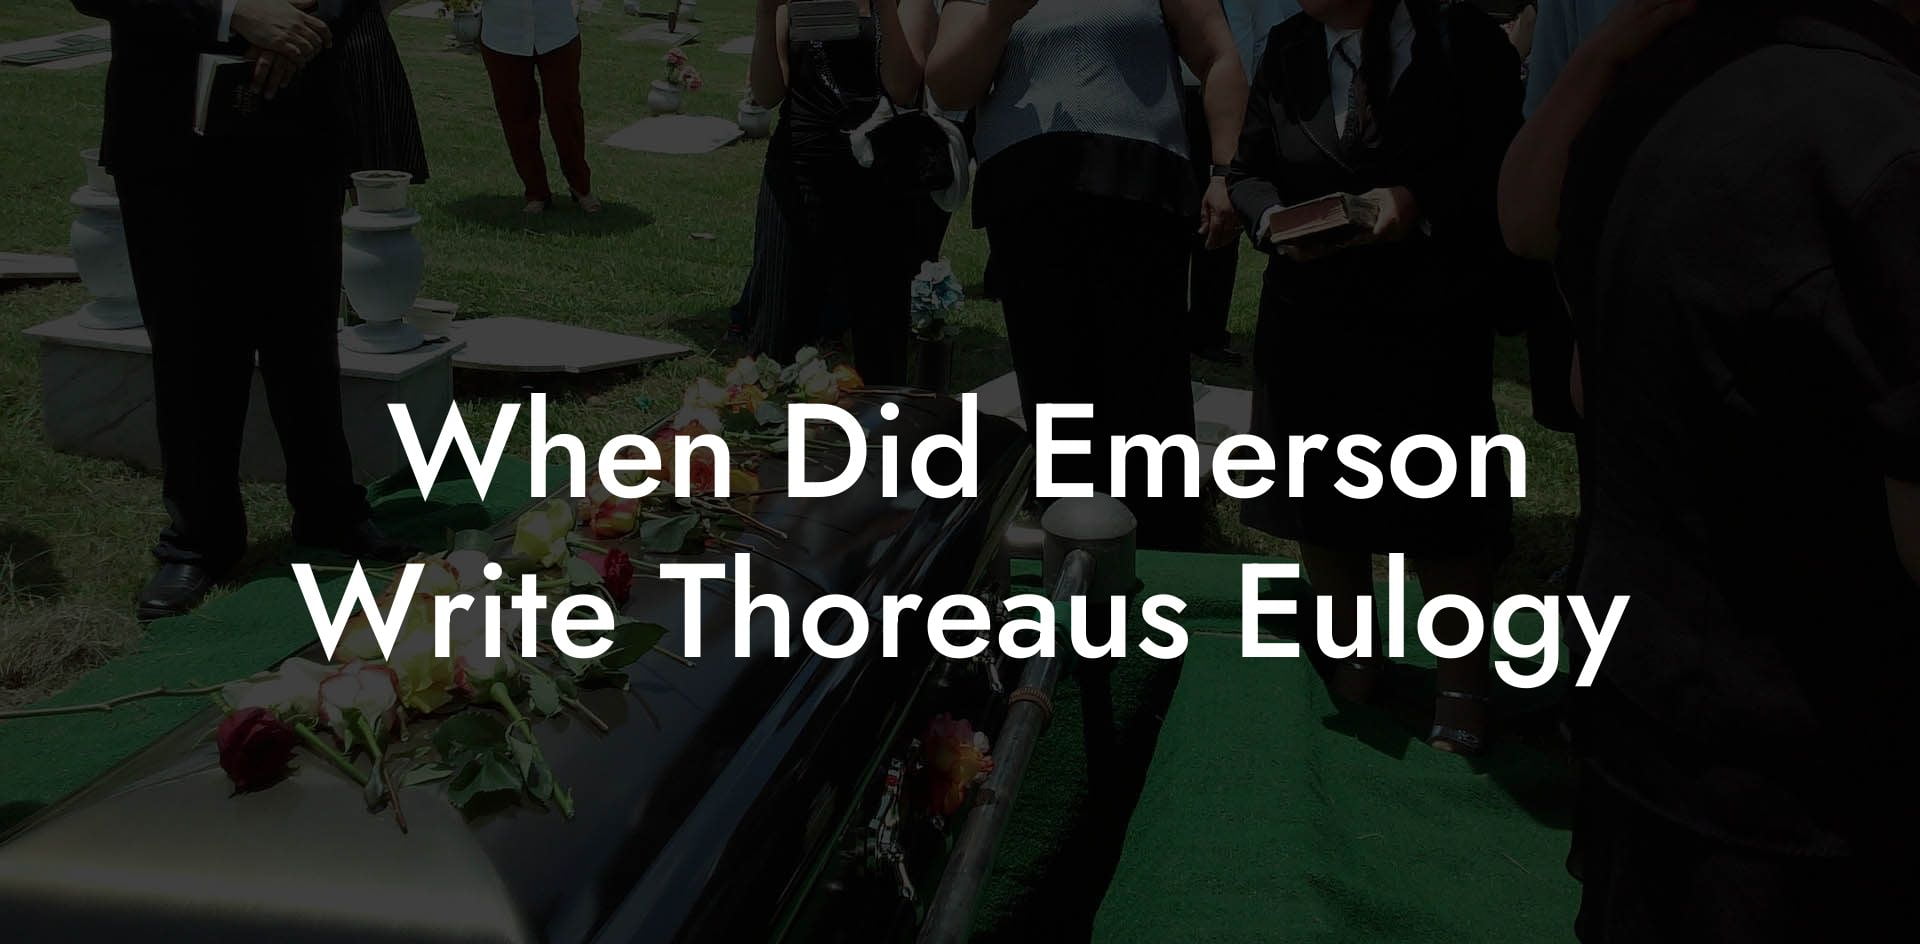 When Did Emerson Write Thoreau's Eulogy